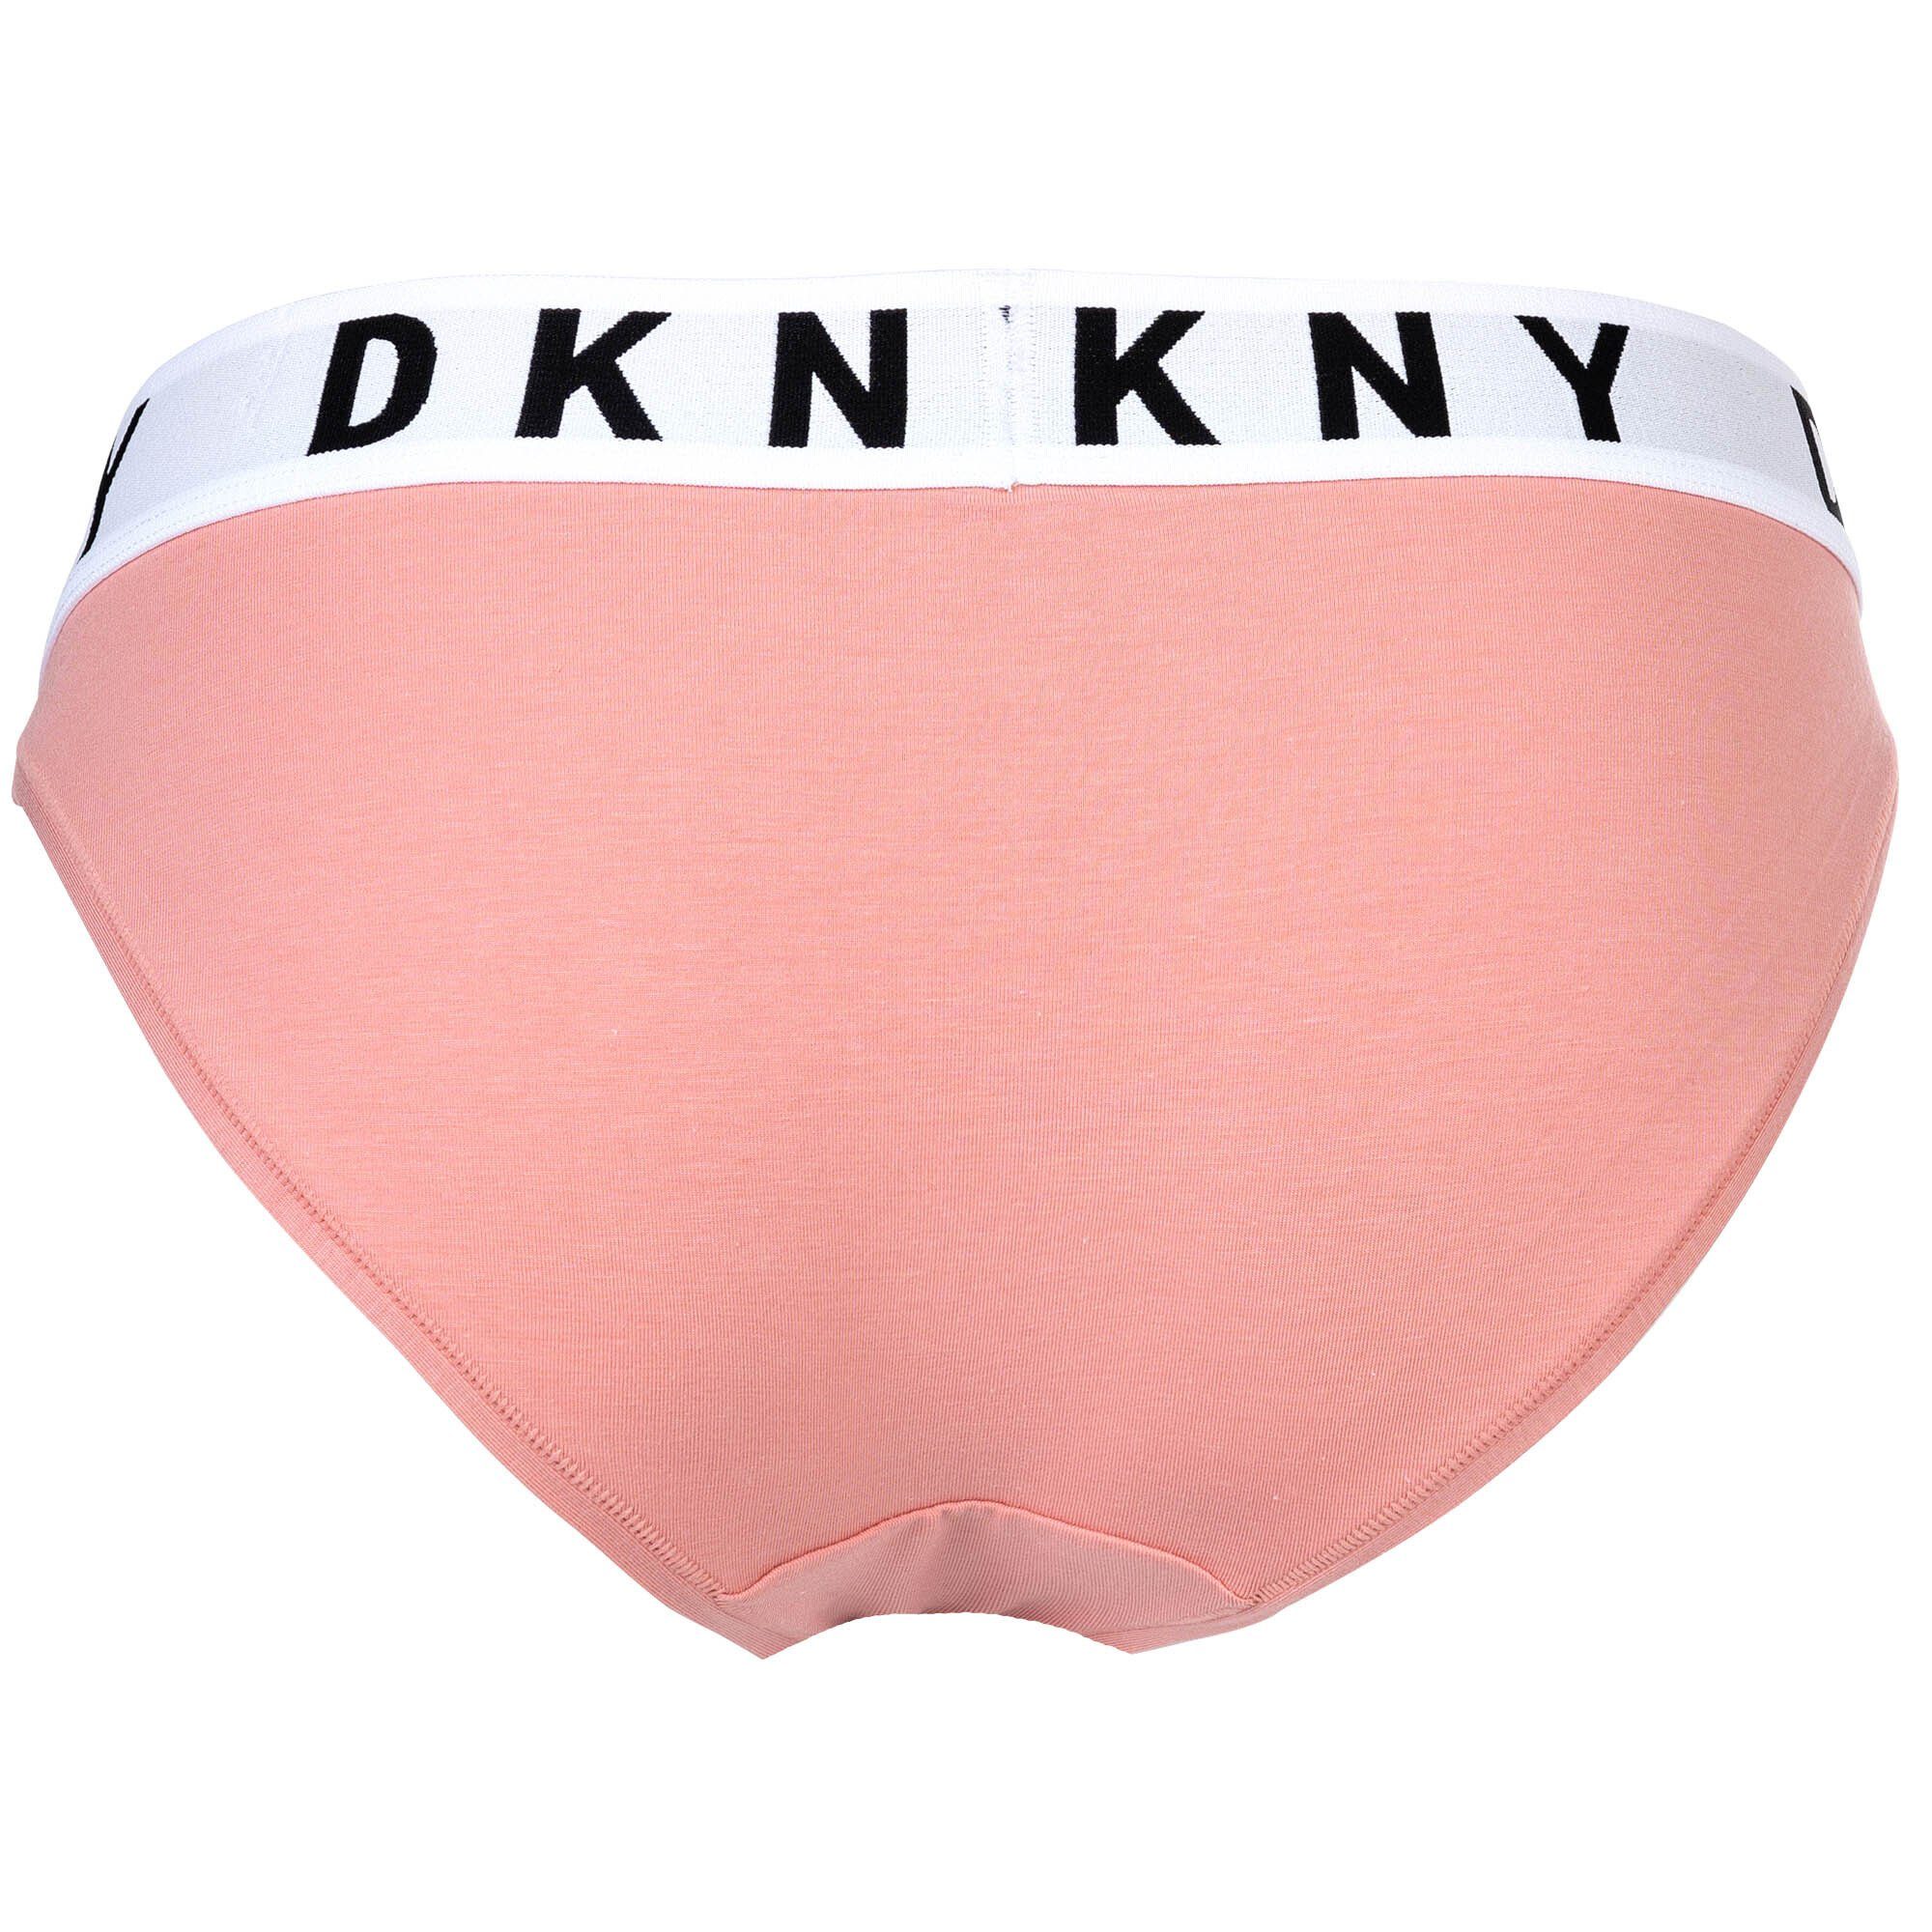 DKNY Panty Cotton Damen Stretch - Modal Brief, Slip Altrosa